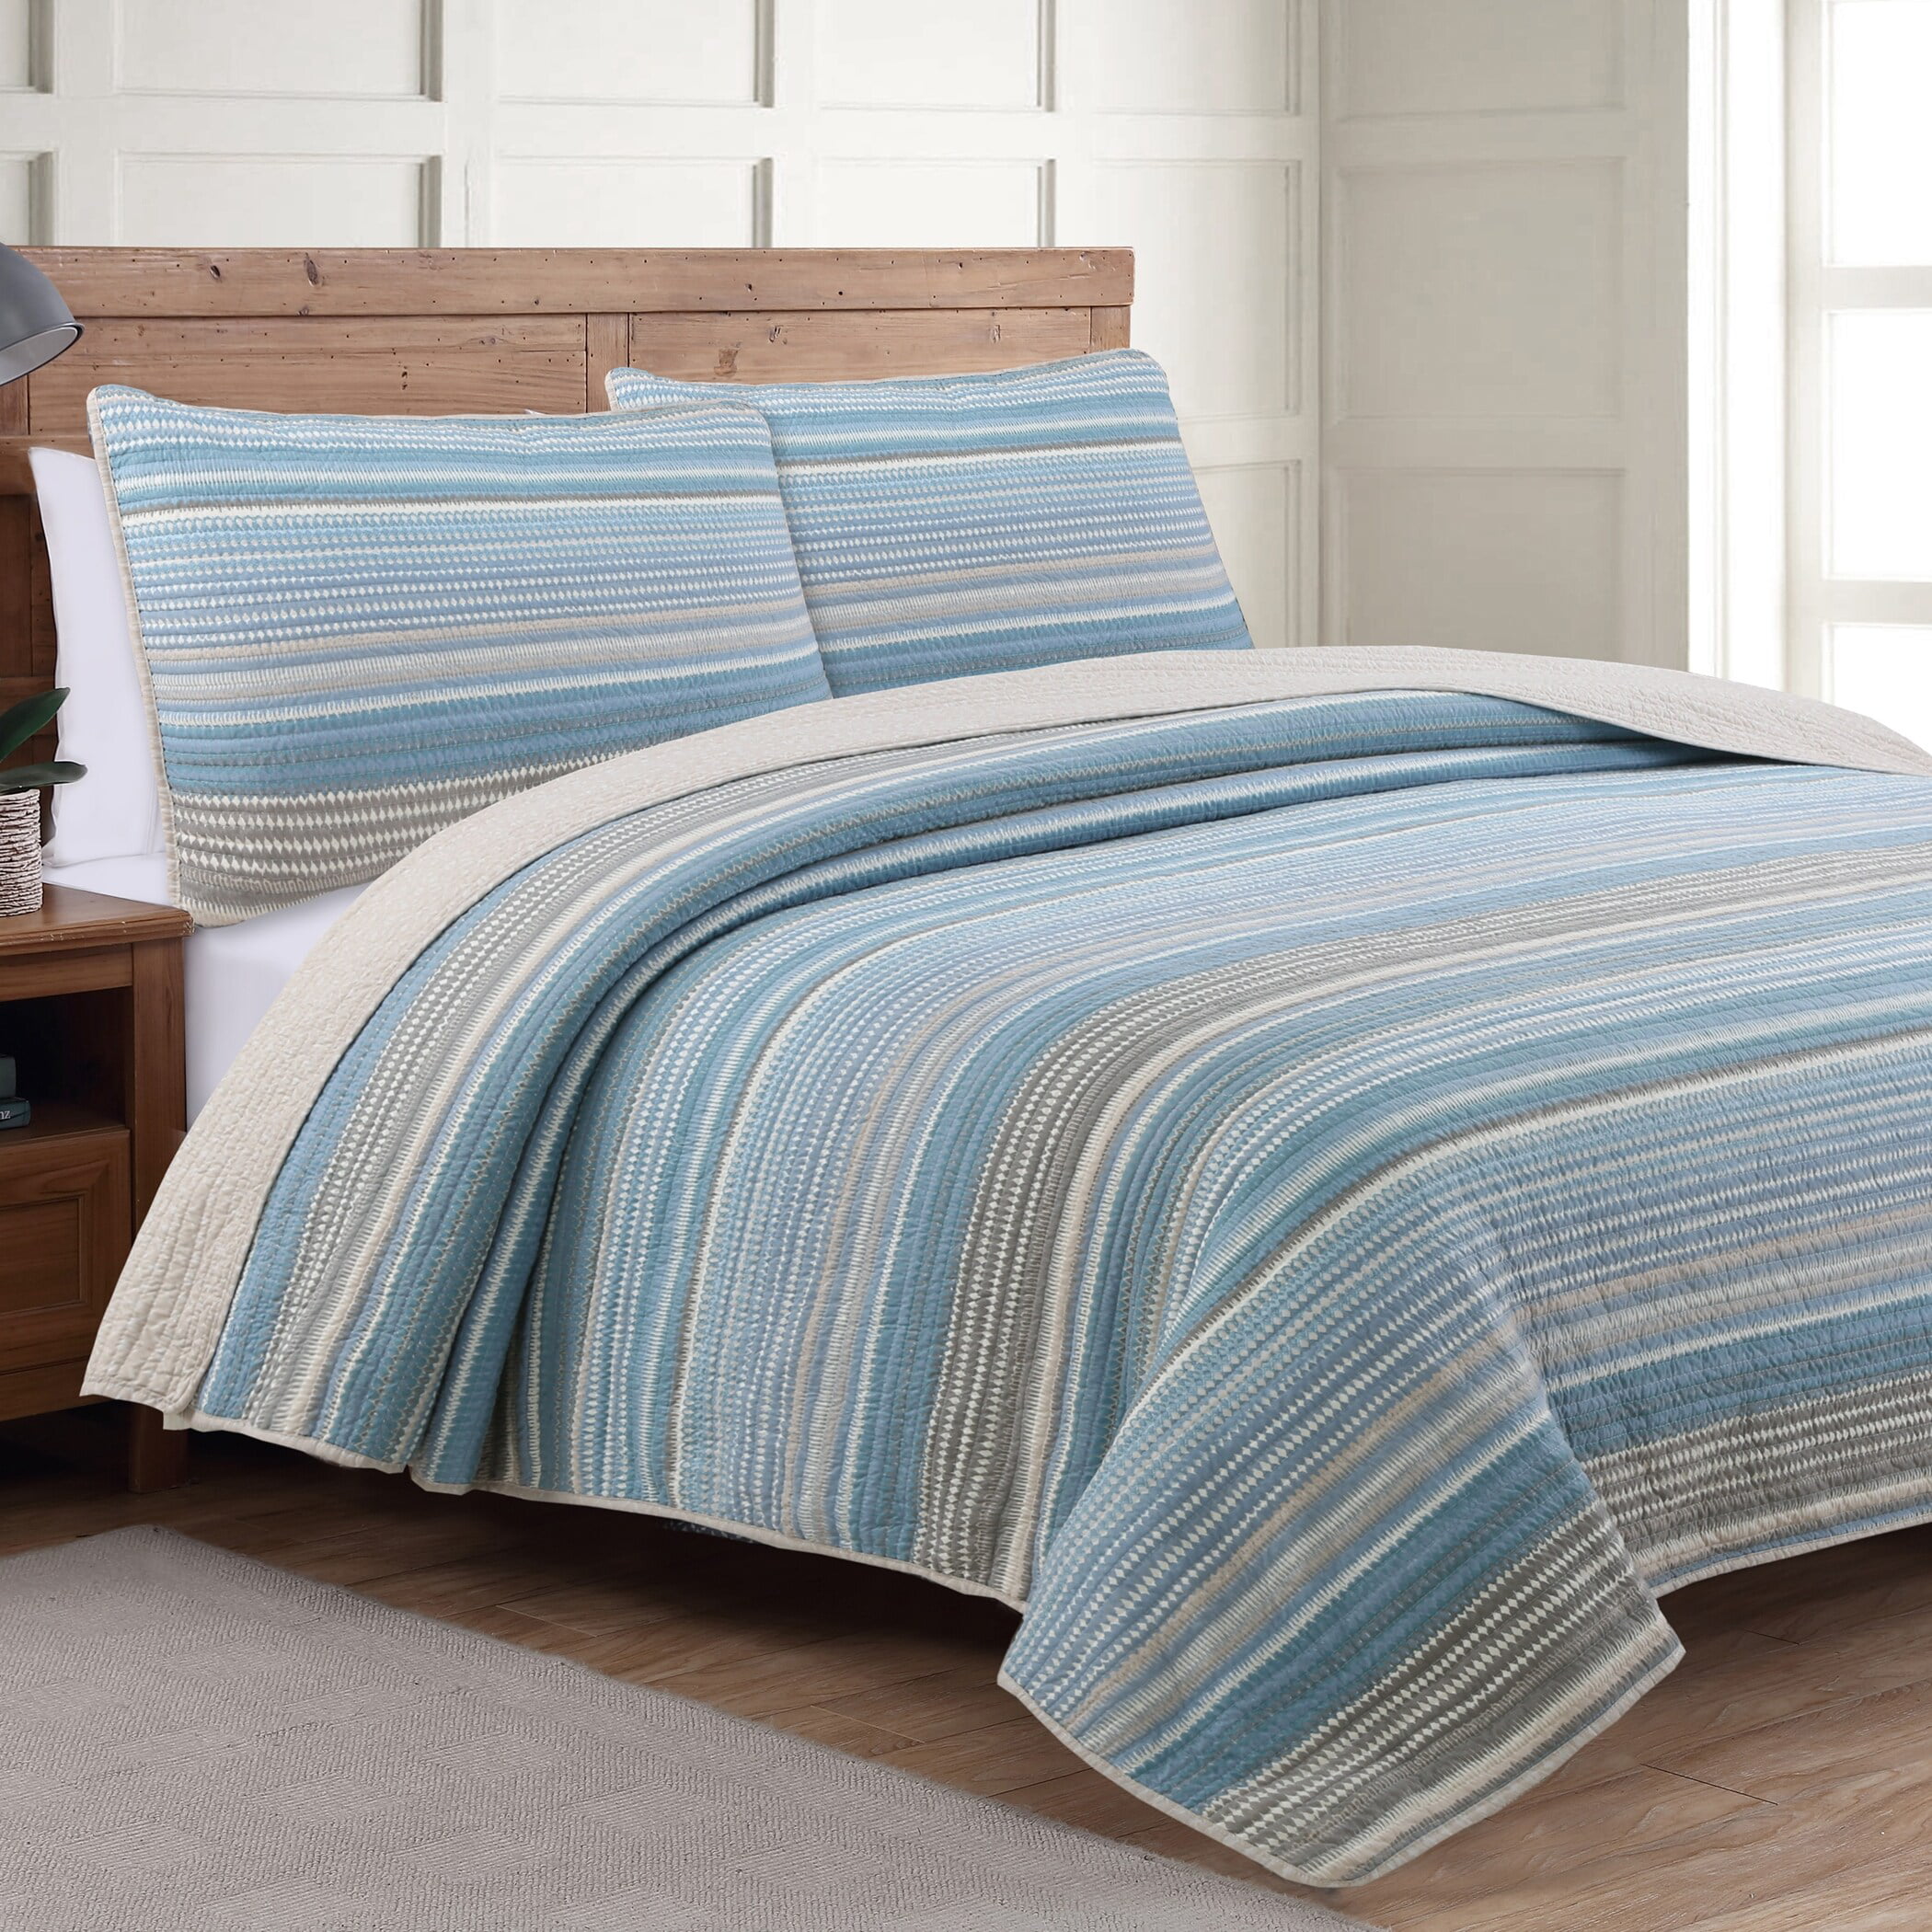 Details about   Summer Quilted Bedspread & Pillow Shams Set Sunshine Sand Waves Print 